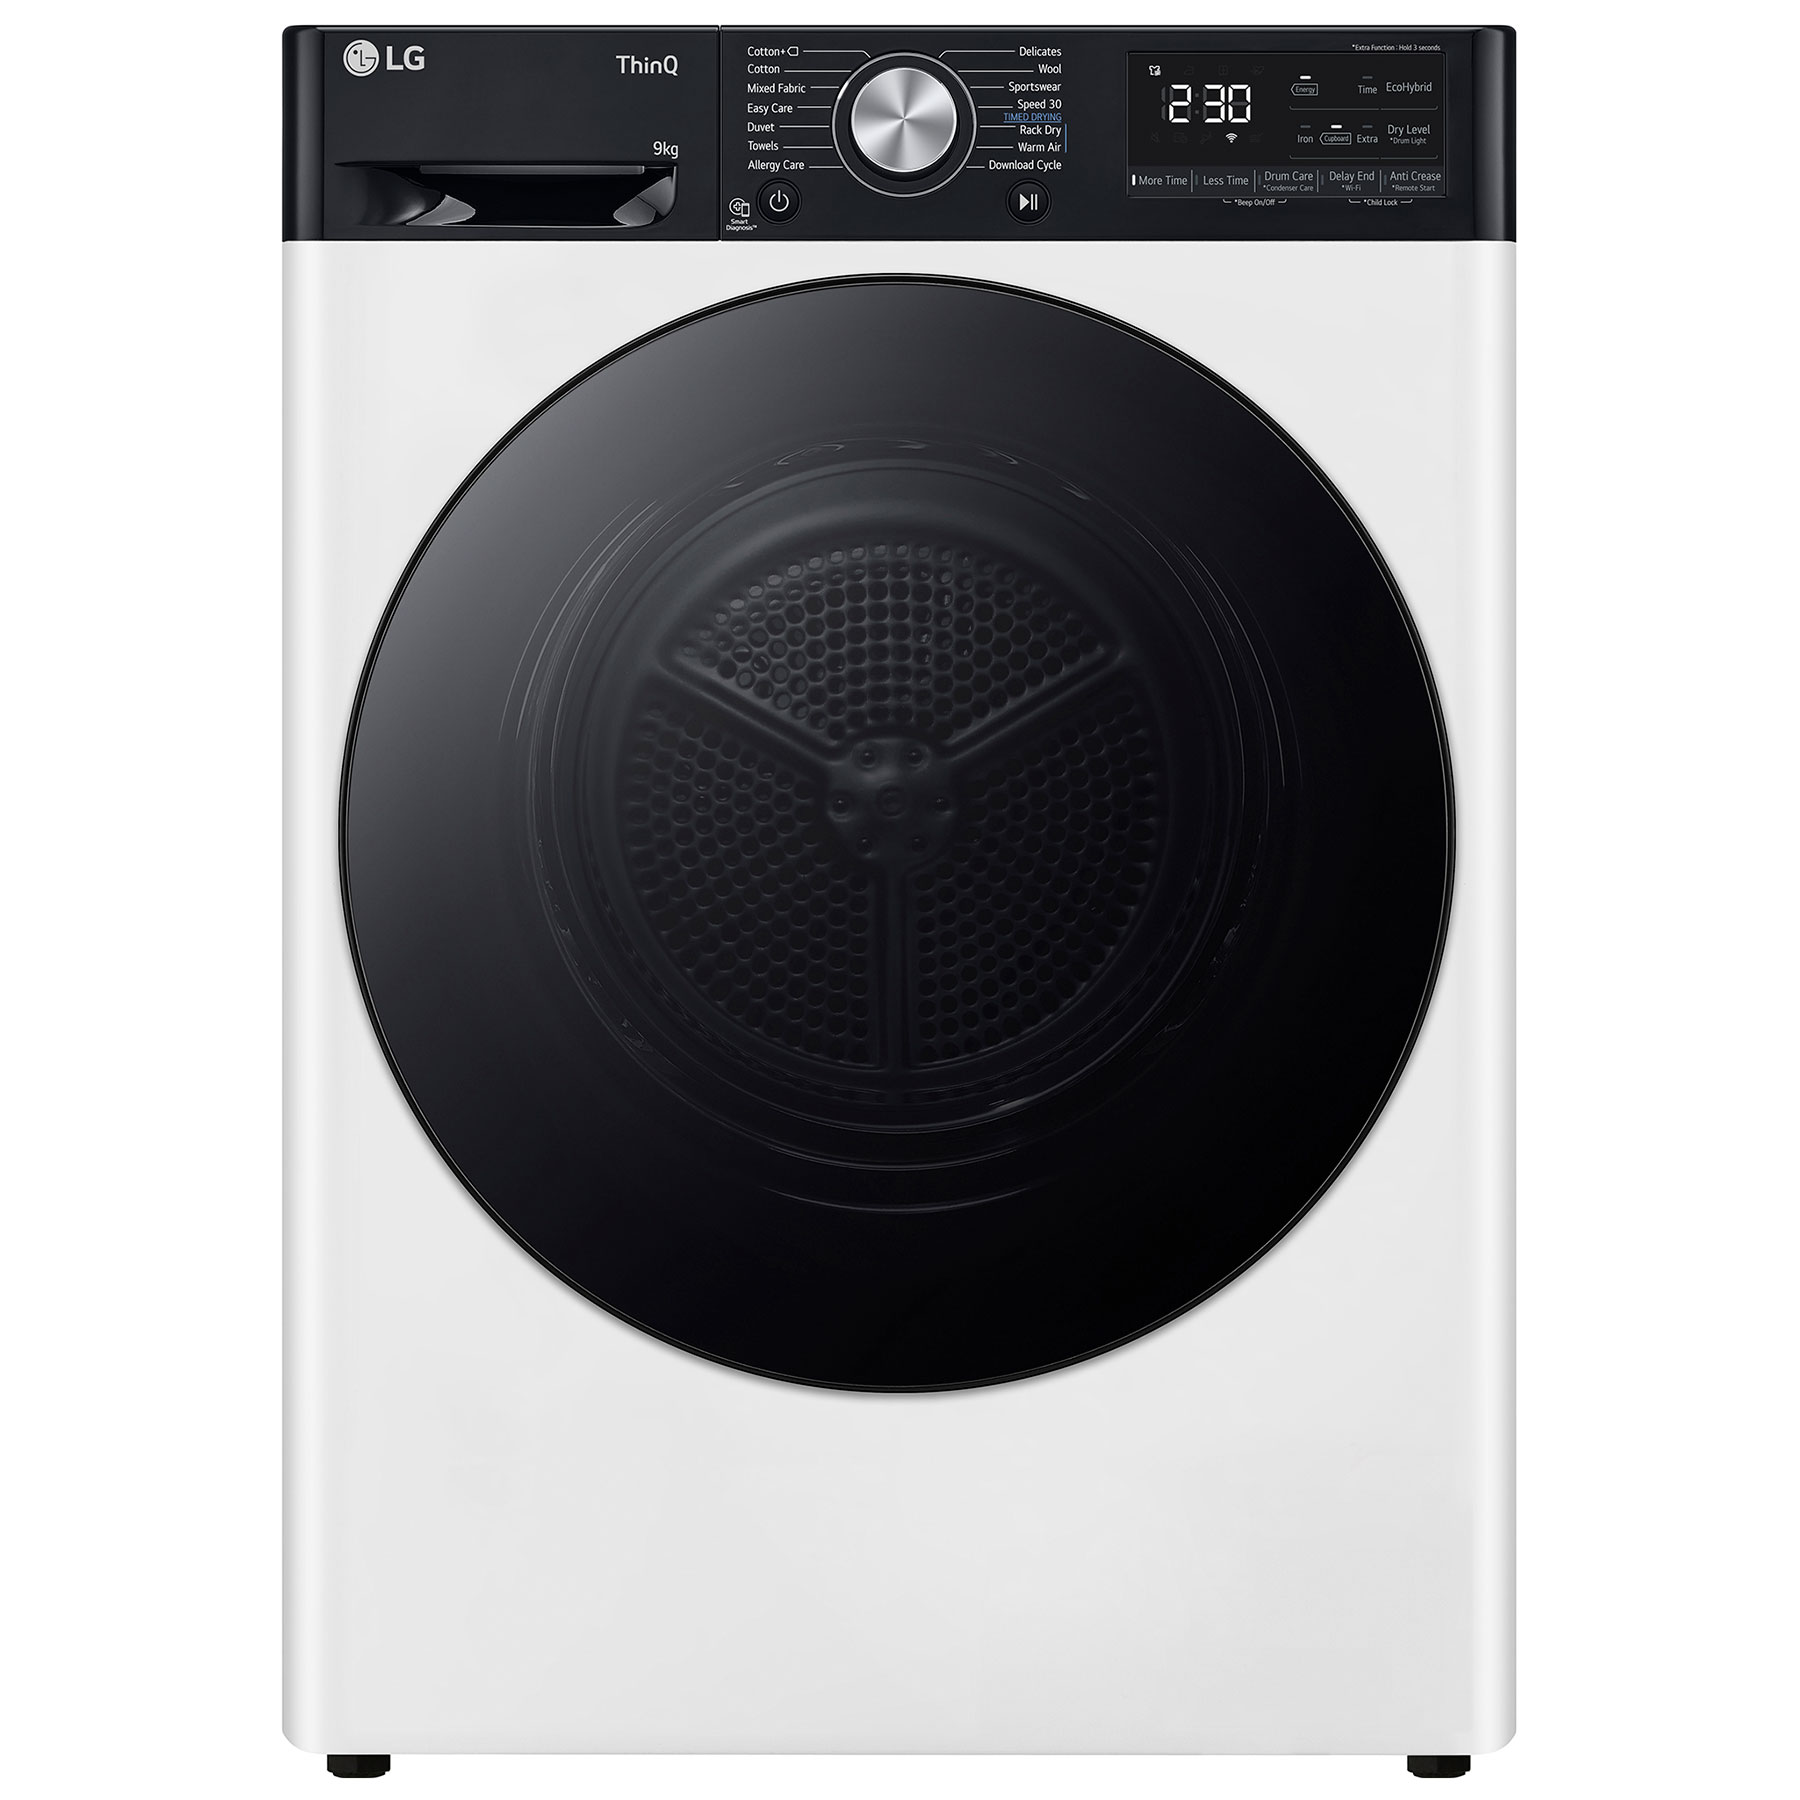 Image of LG FDV909WN 9kg Dual Heat Pump Condenser Dryer in White A